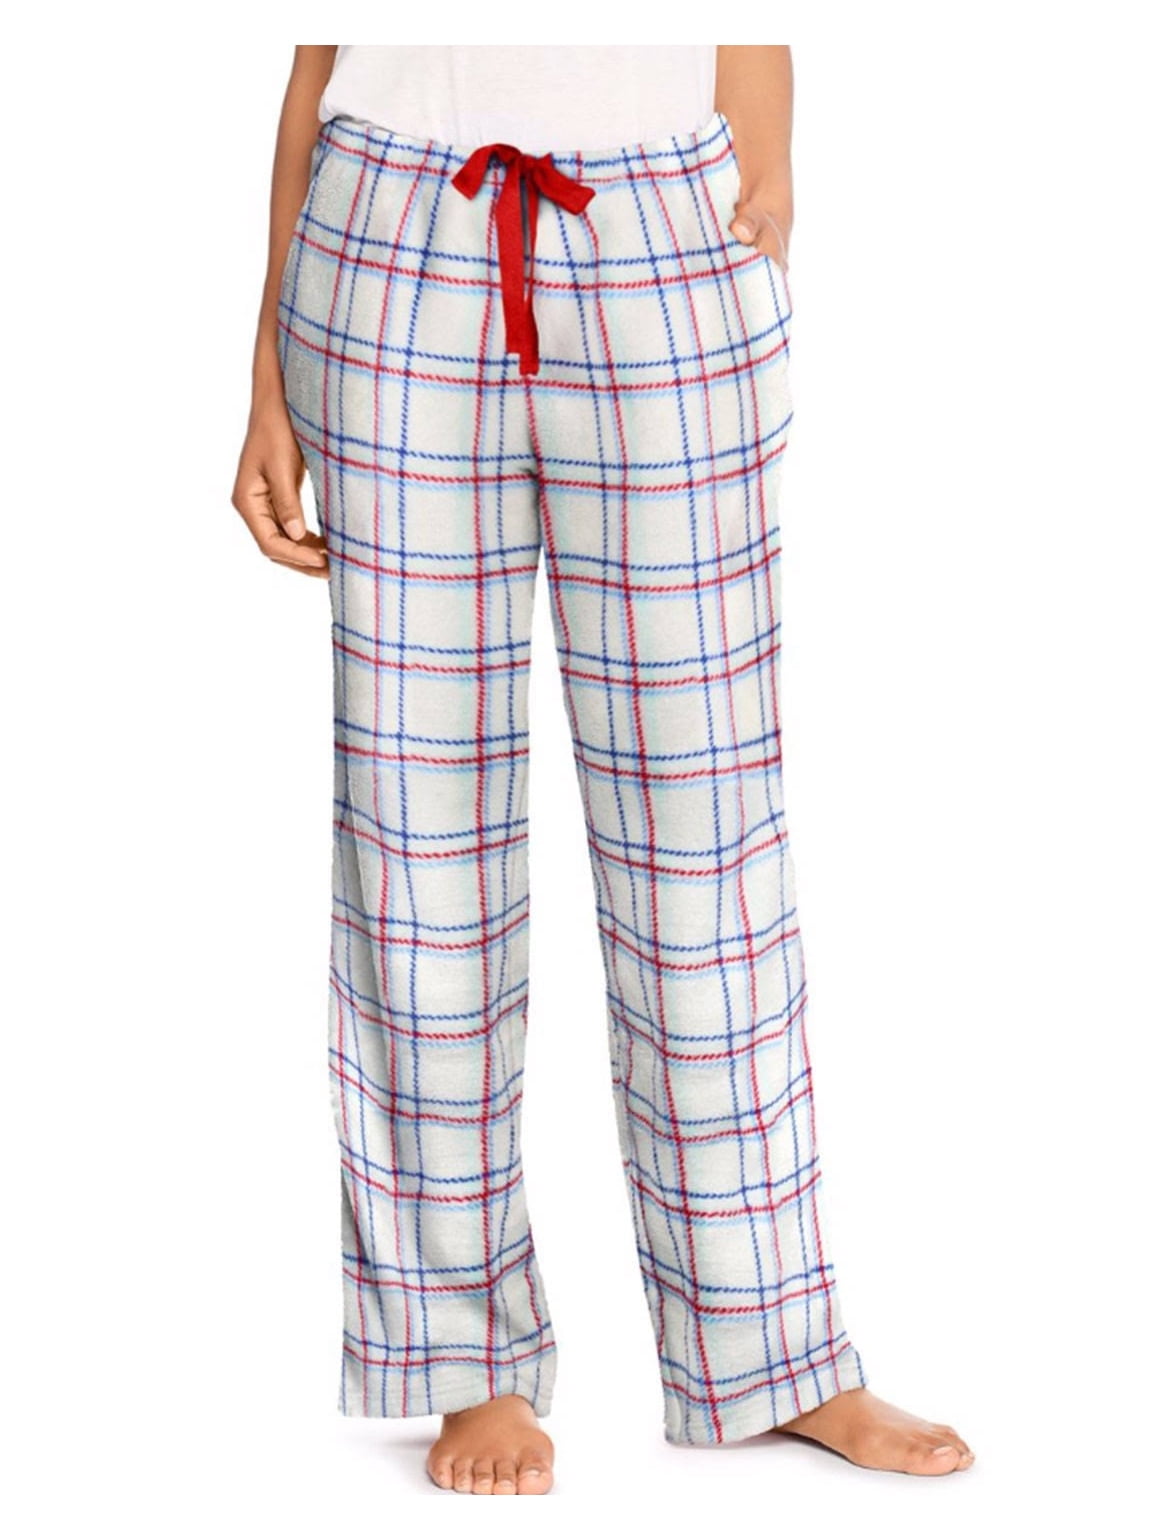 Women's Hanes Plaid Fleece Pajama Pants White | Walmart Canada